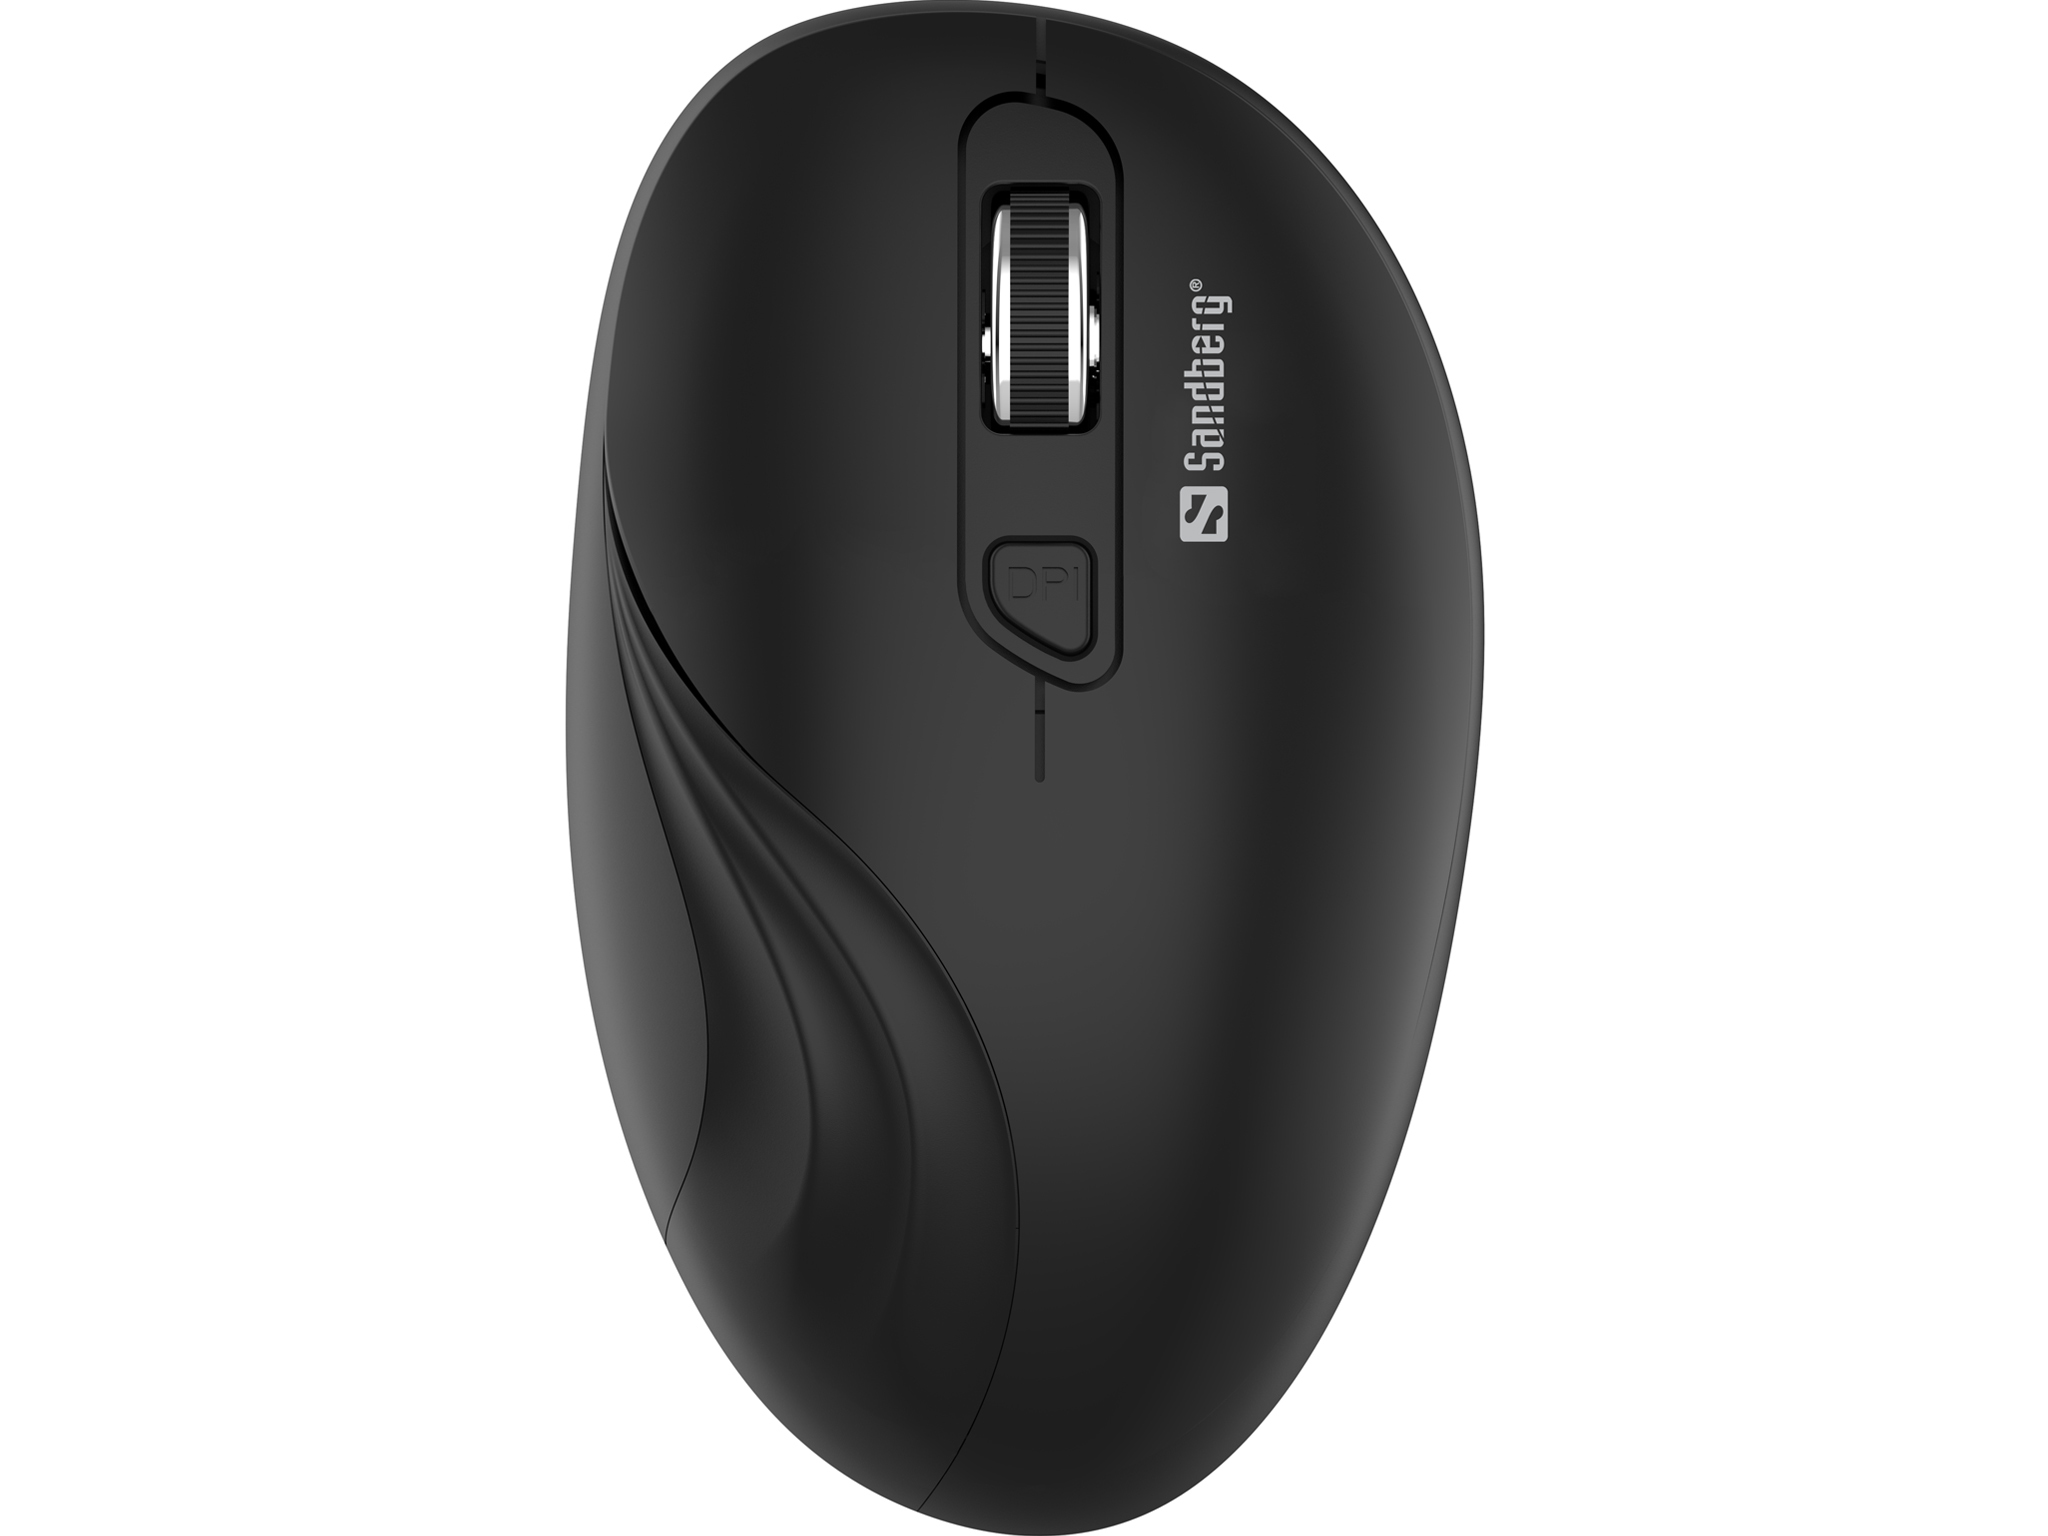 SANDBERG Wireless Mouse